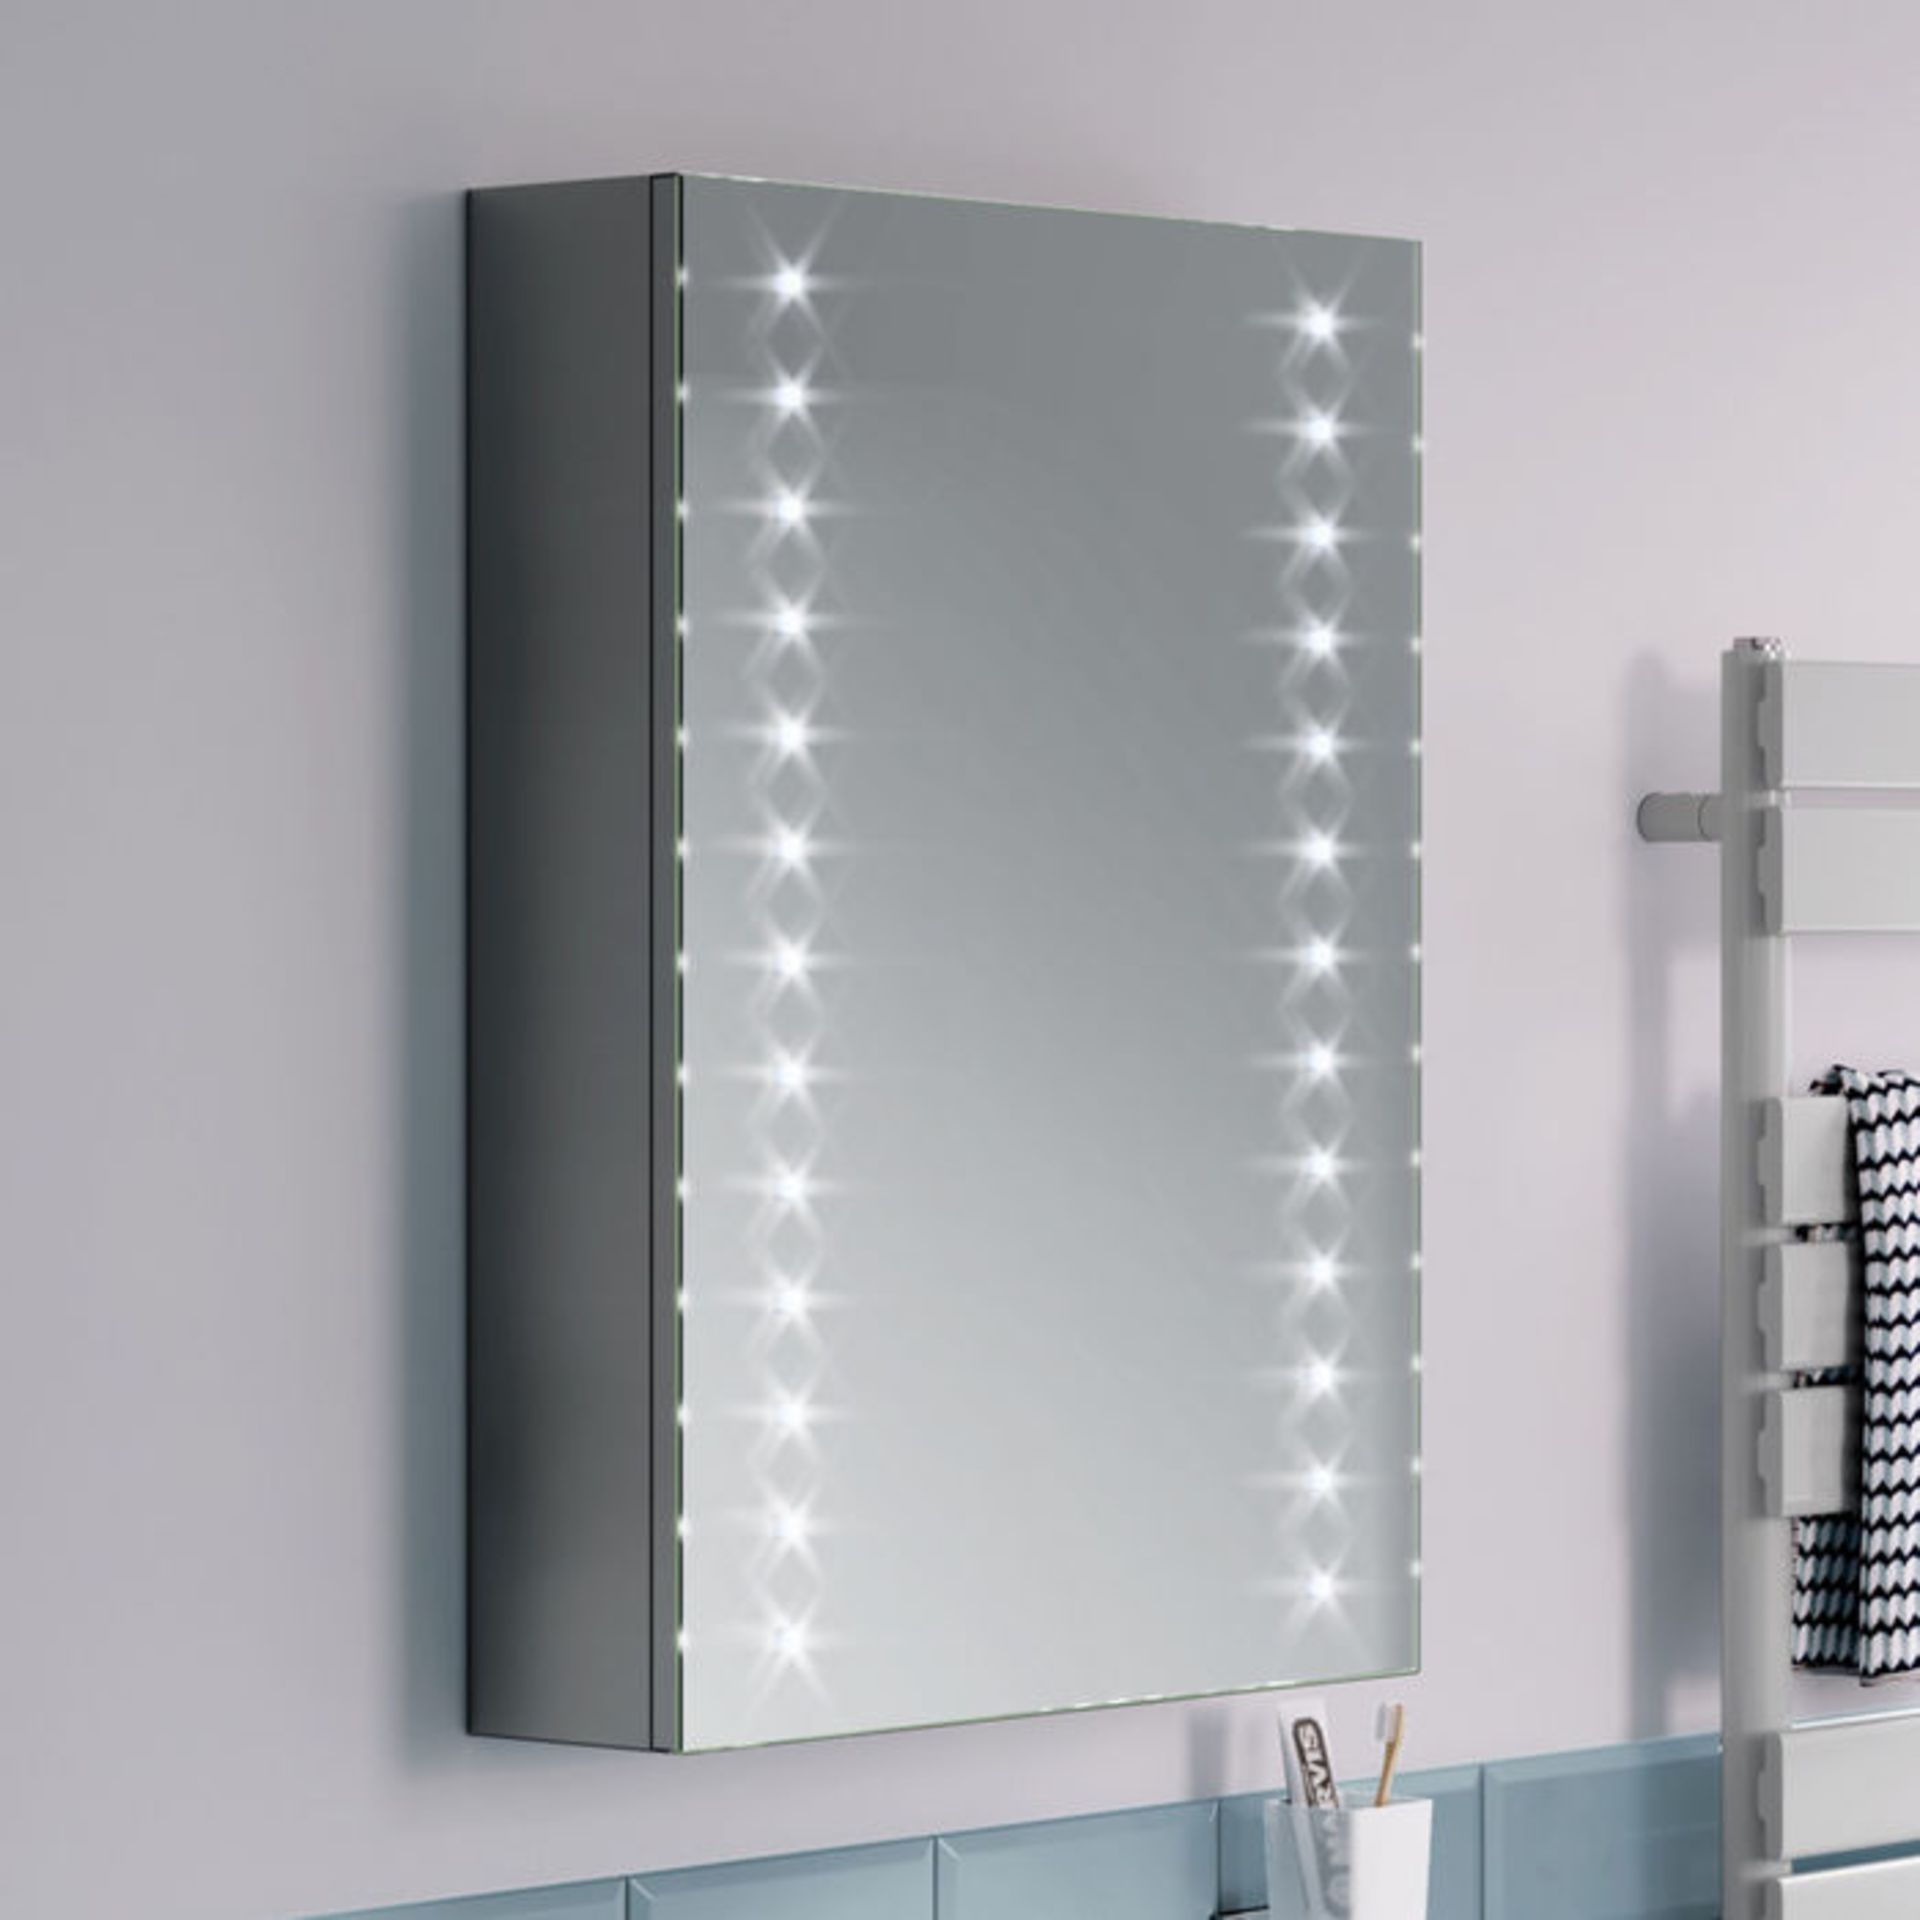 (OS76) 500x700mm Galactic Illuminated LED Mirror Cabinet - Shaver Socket. RRP £399.99. Double - Image 2 of 5